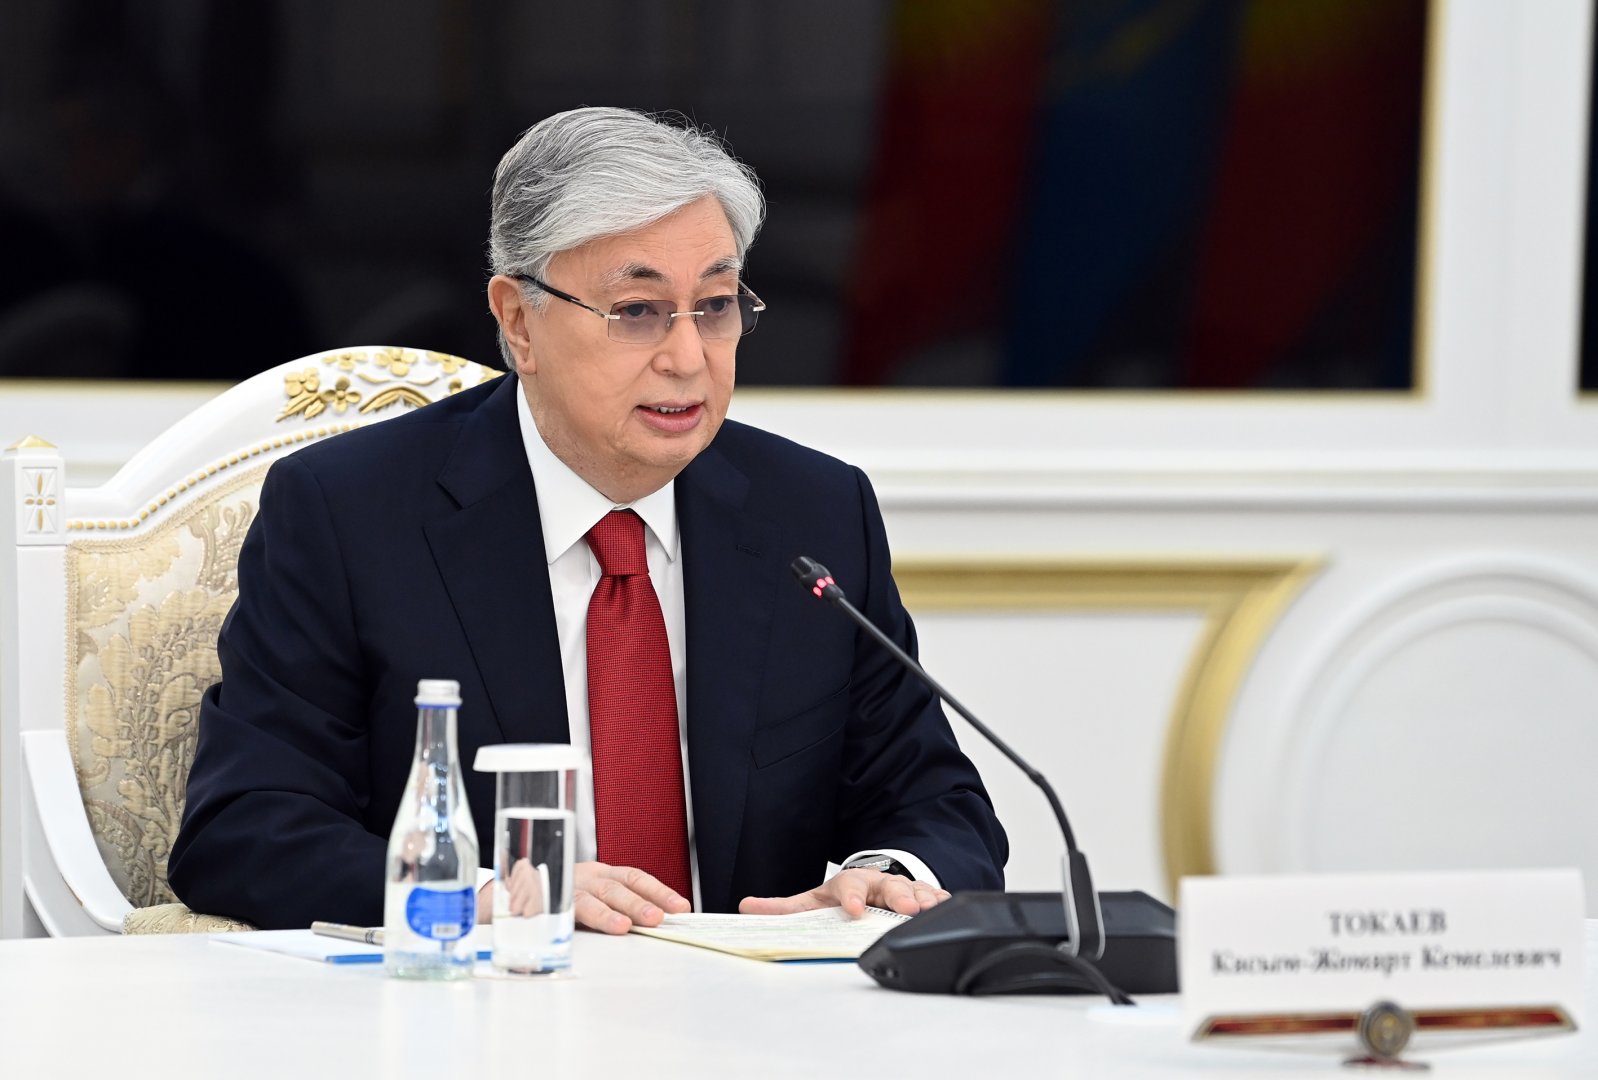 Касым-Жомарт Токаев: Кыргызстан — богом данный сосед и ближайший союзник Казахстана